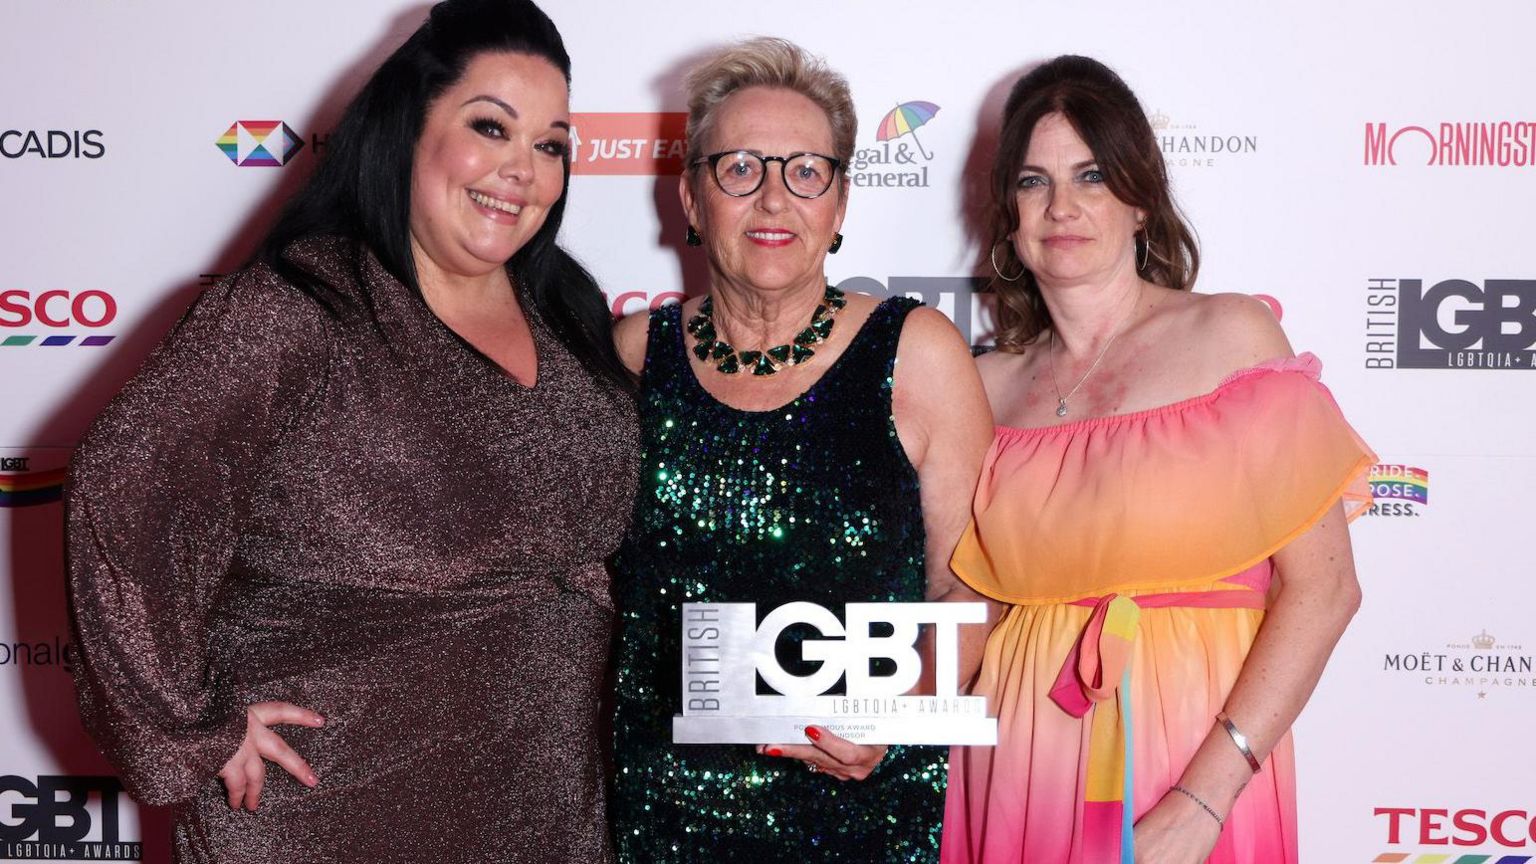 Three women pose with silver British LGBT Award